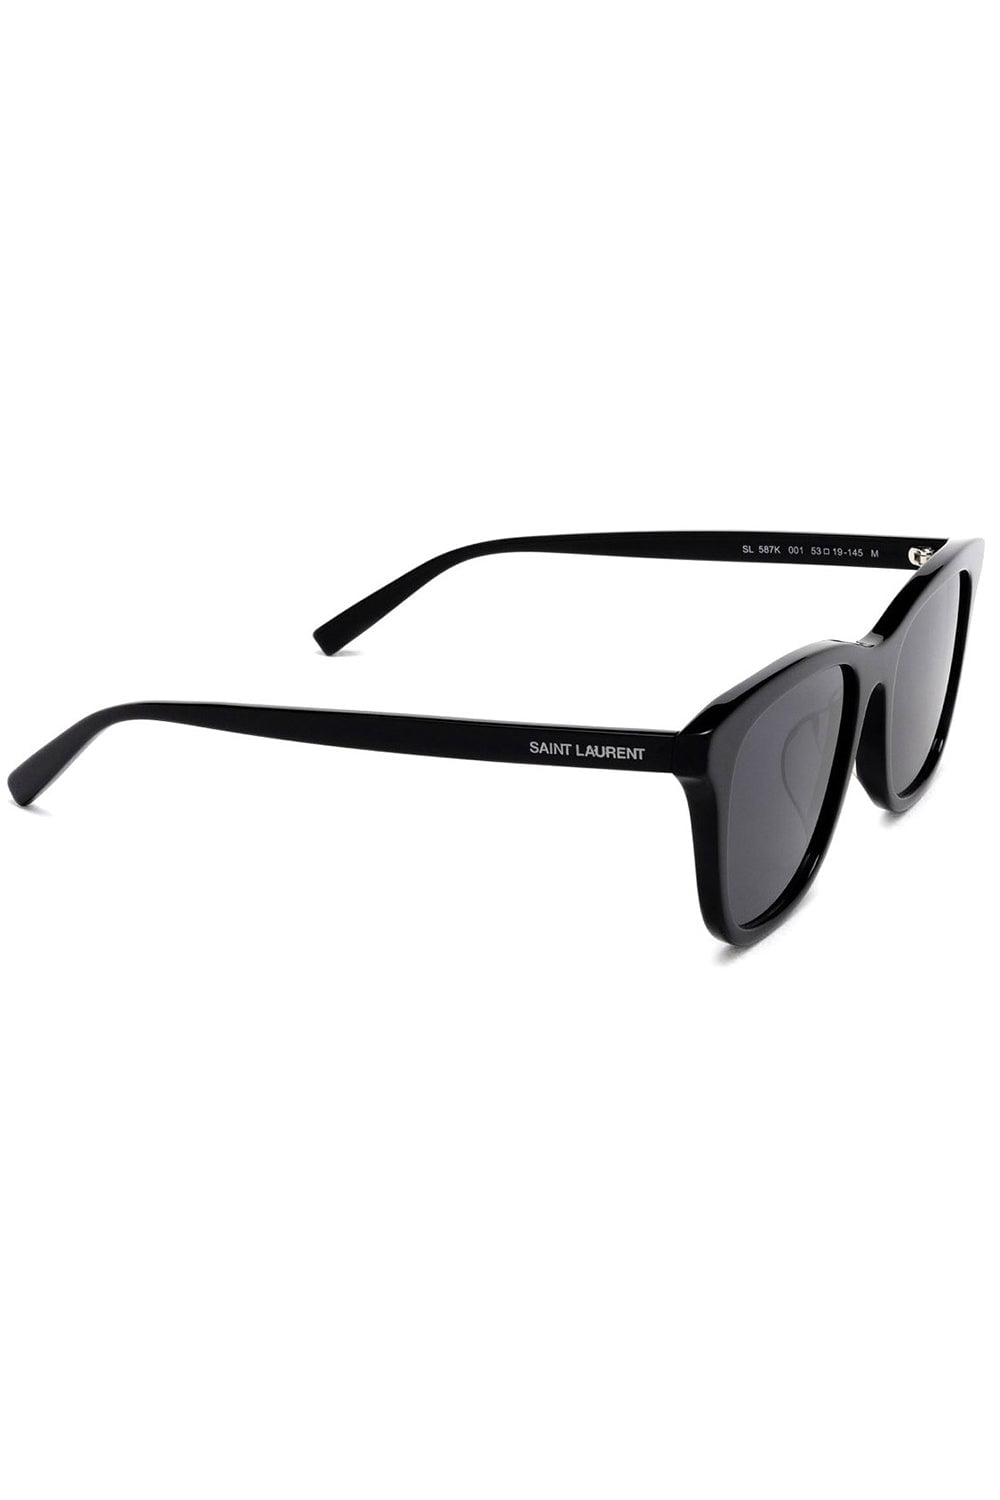 SAINT LAURENT-Classic Sunglasses-BLCK/BLK